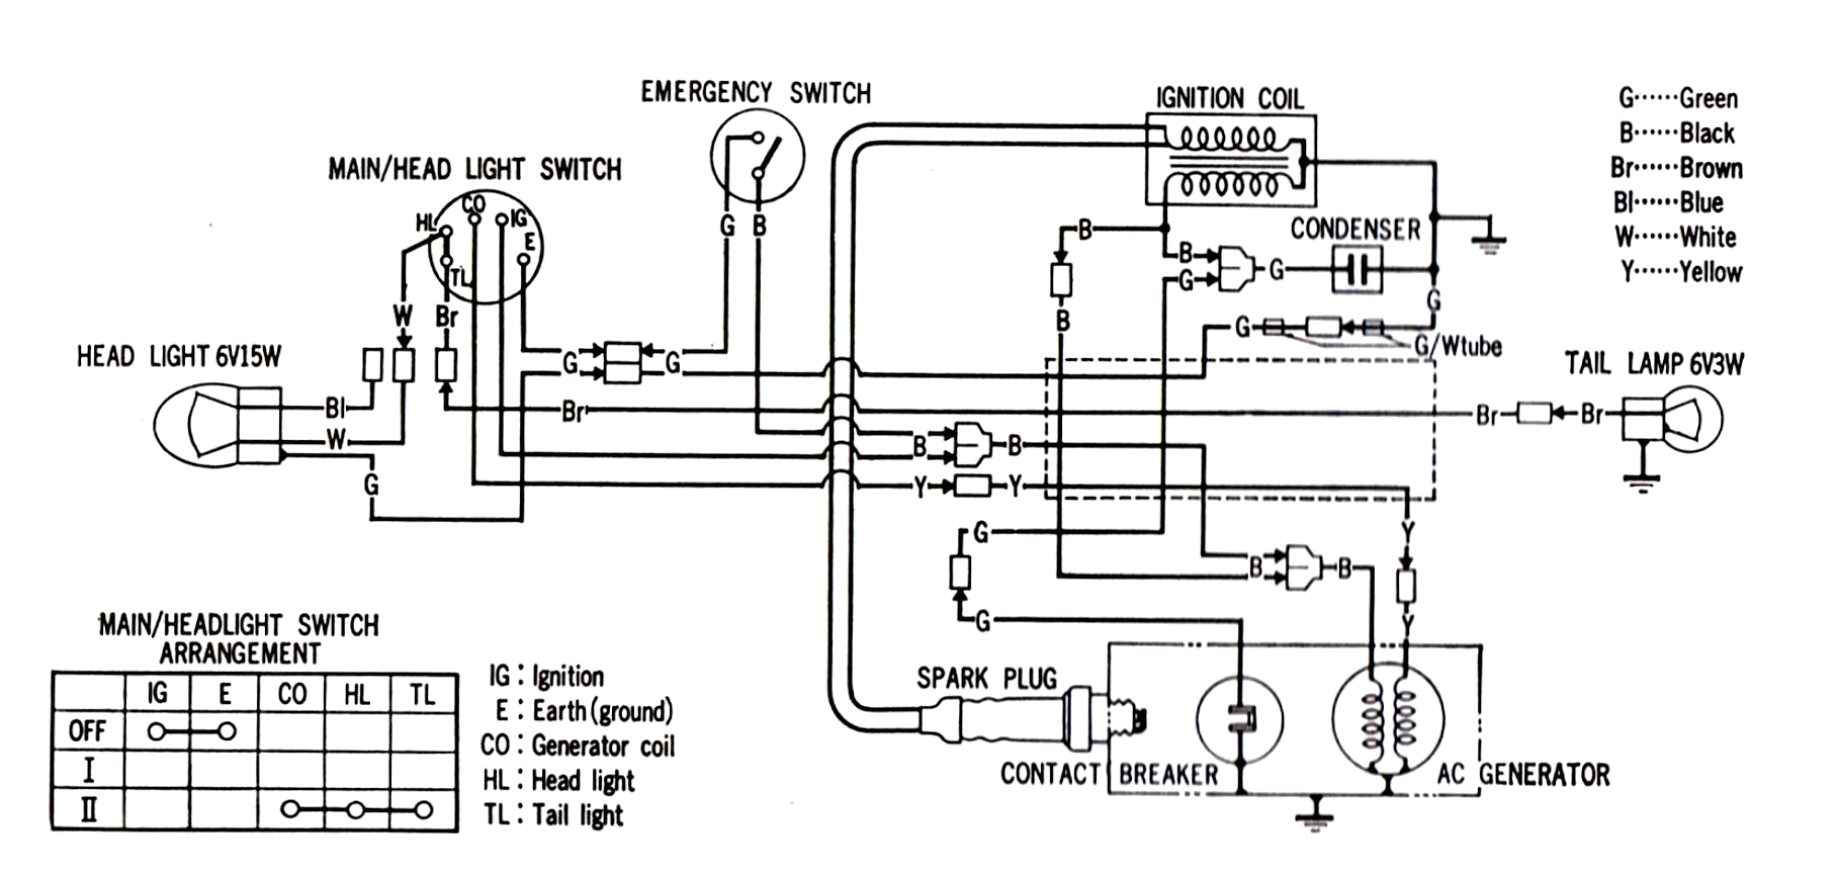 honda crf wiring diagram manual e book honda crf 90 wiring diagram